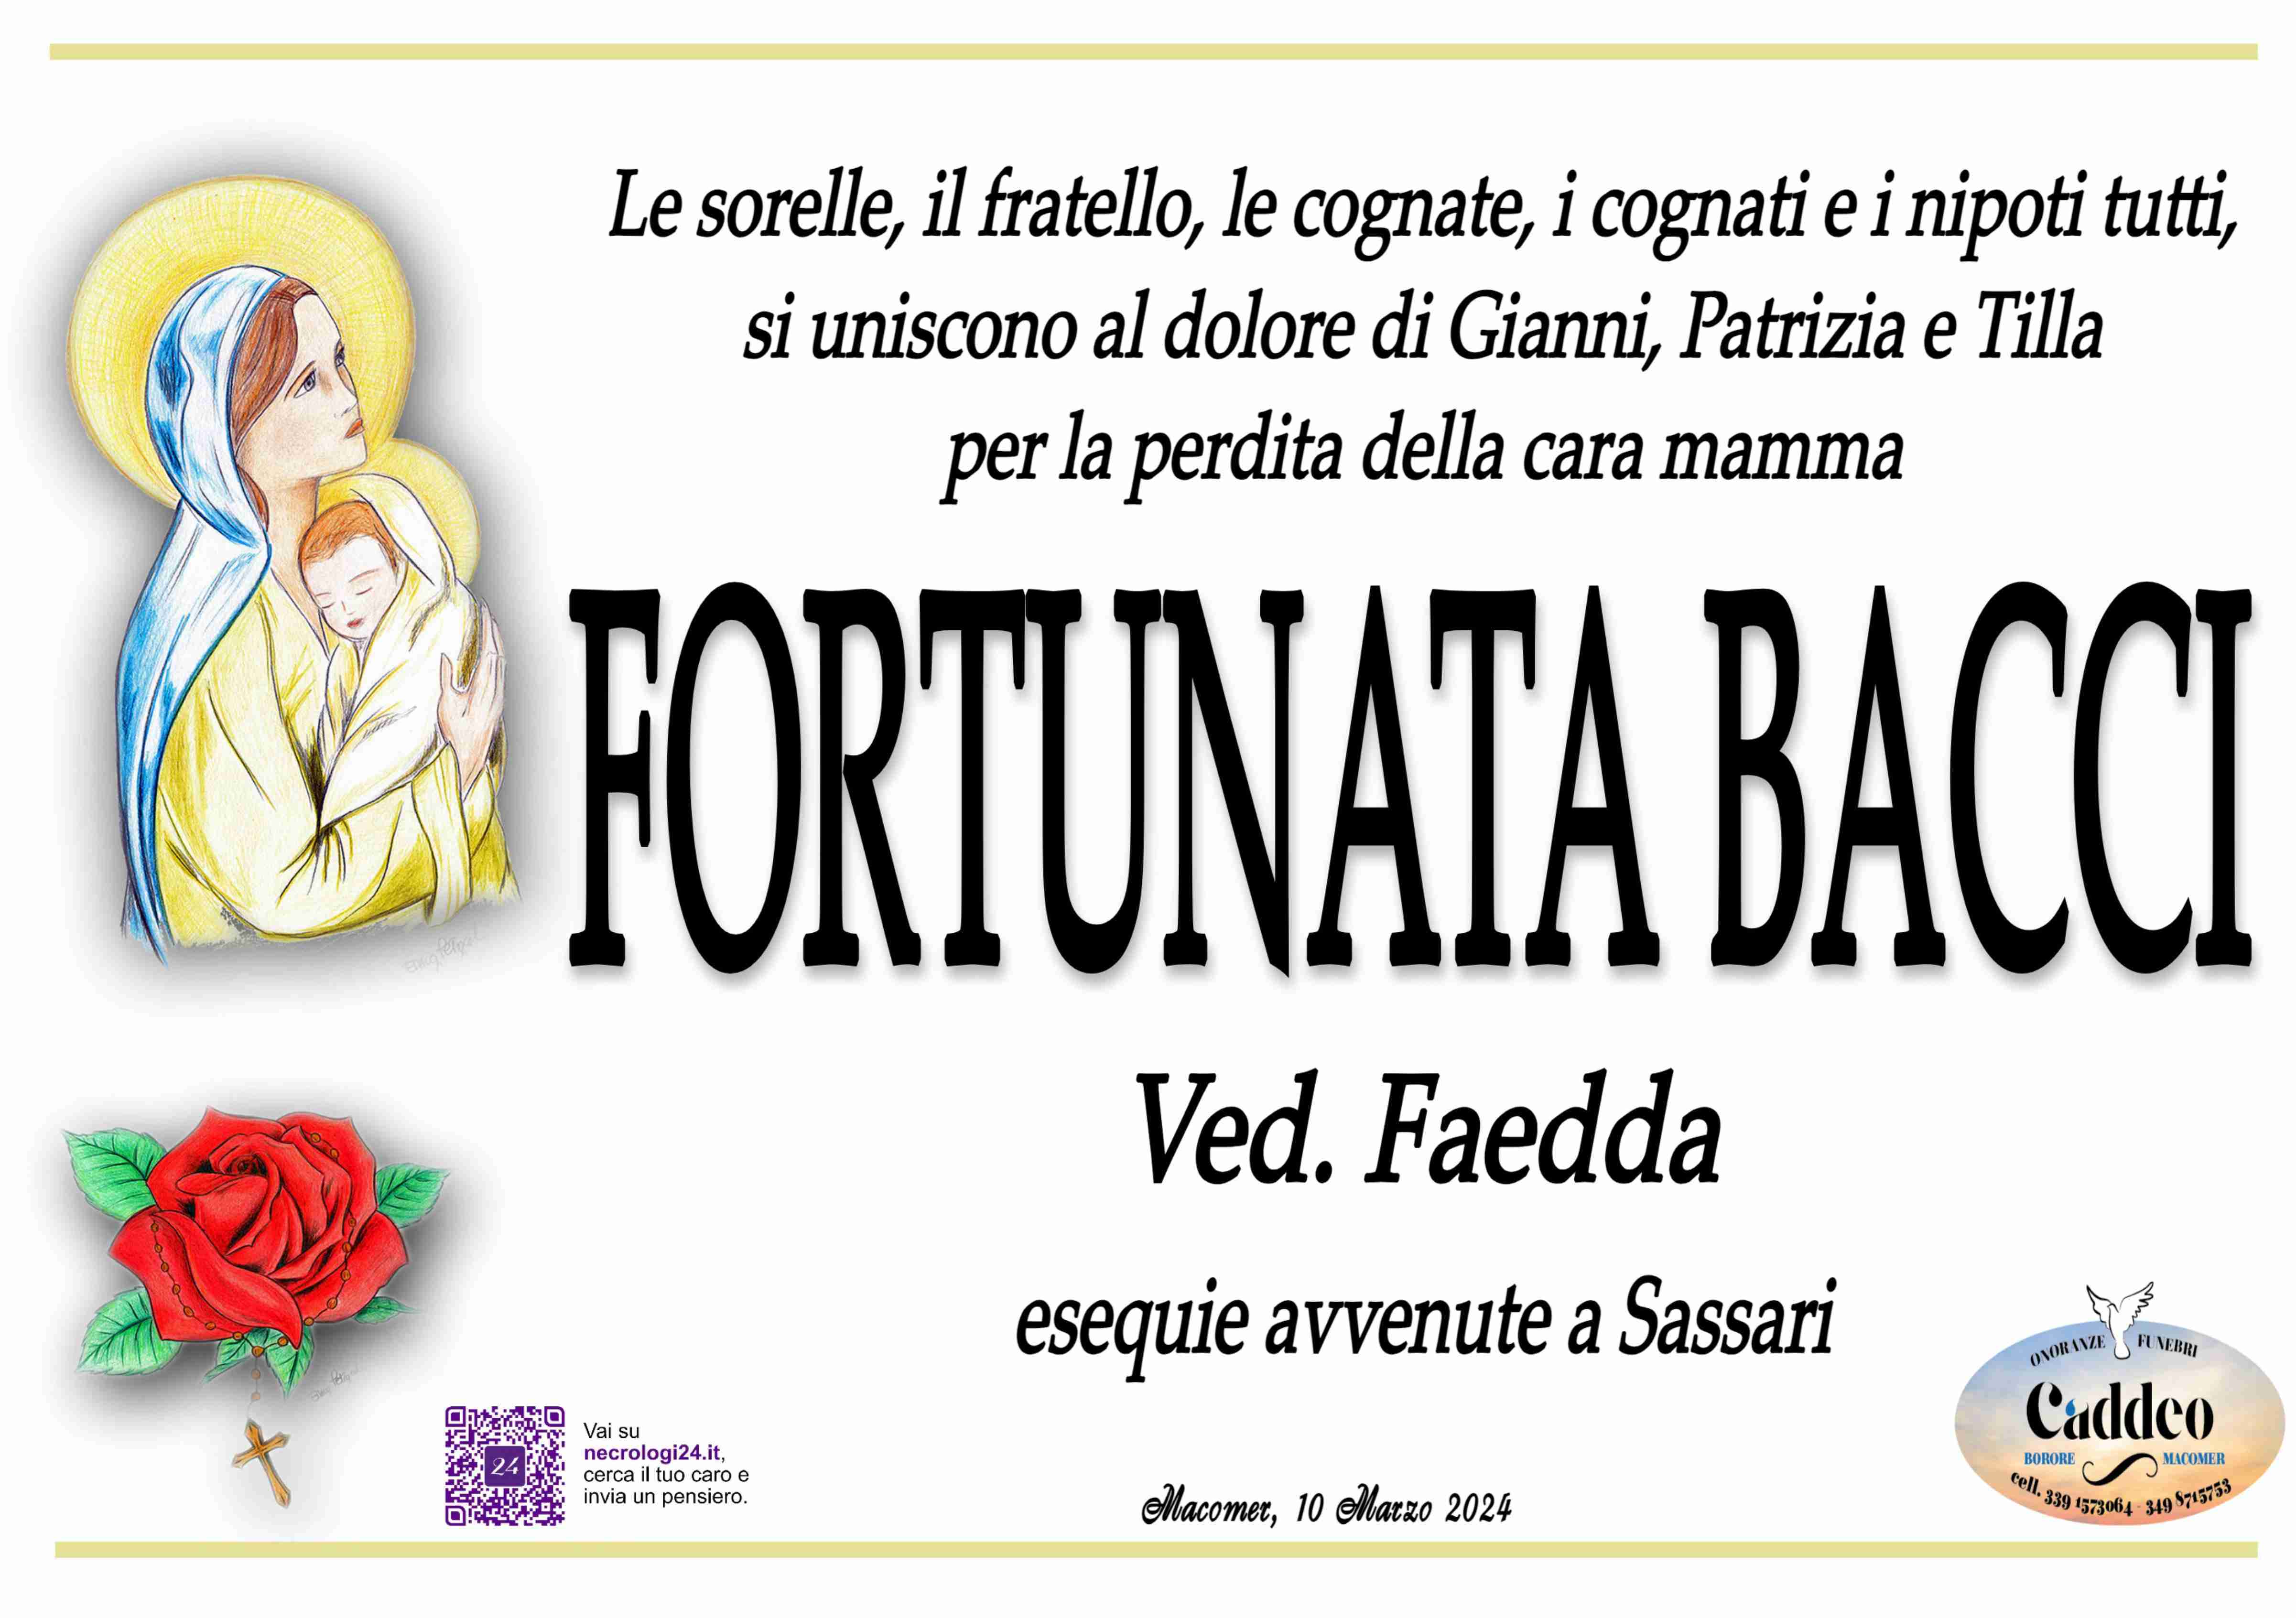 Fortunata Bacci